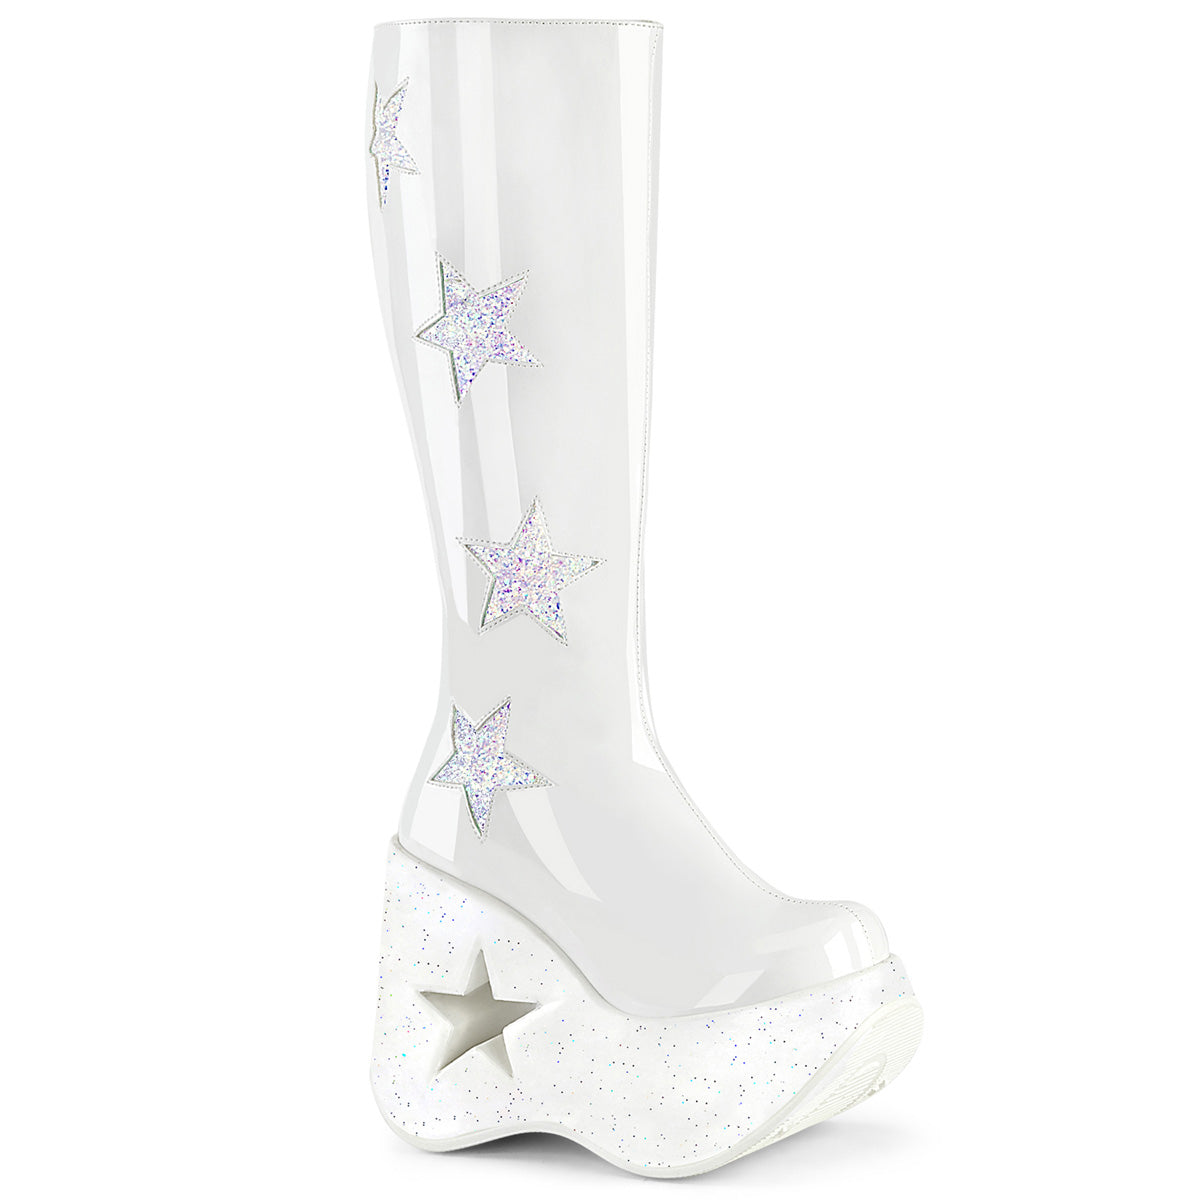 DYNAMITE-218 Alternative Footwear Demonia Women's Mid-Calf & Knee High Boots Wht Pat-Wht Multi Glitter